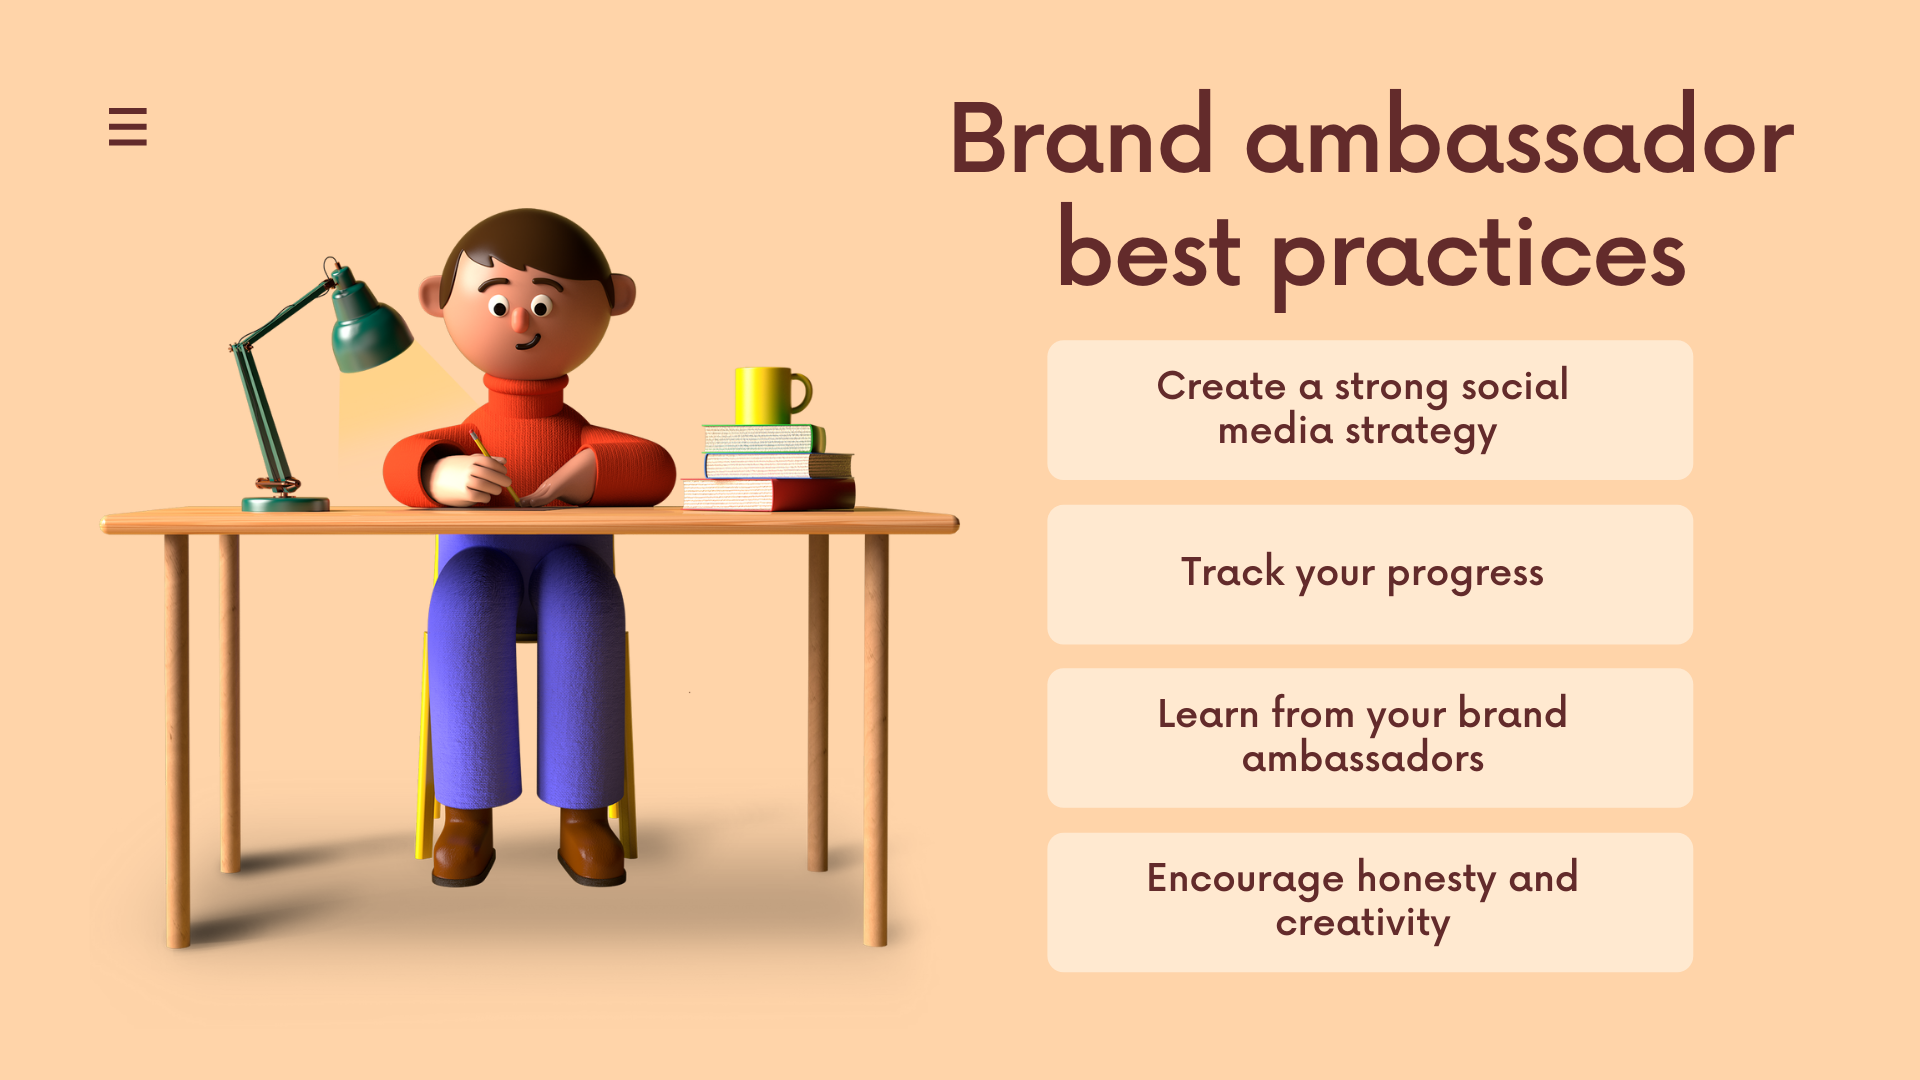 Brand ambassador best practices